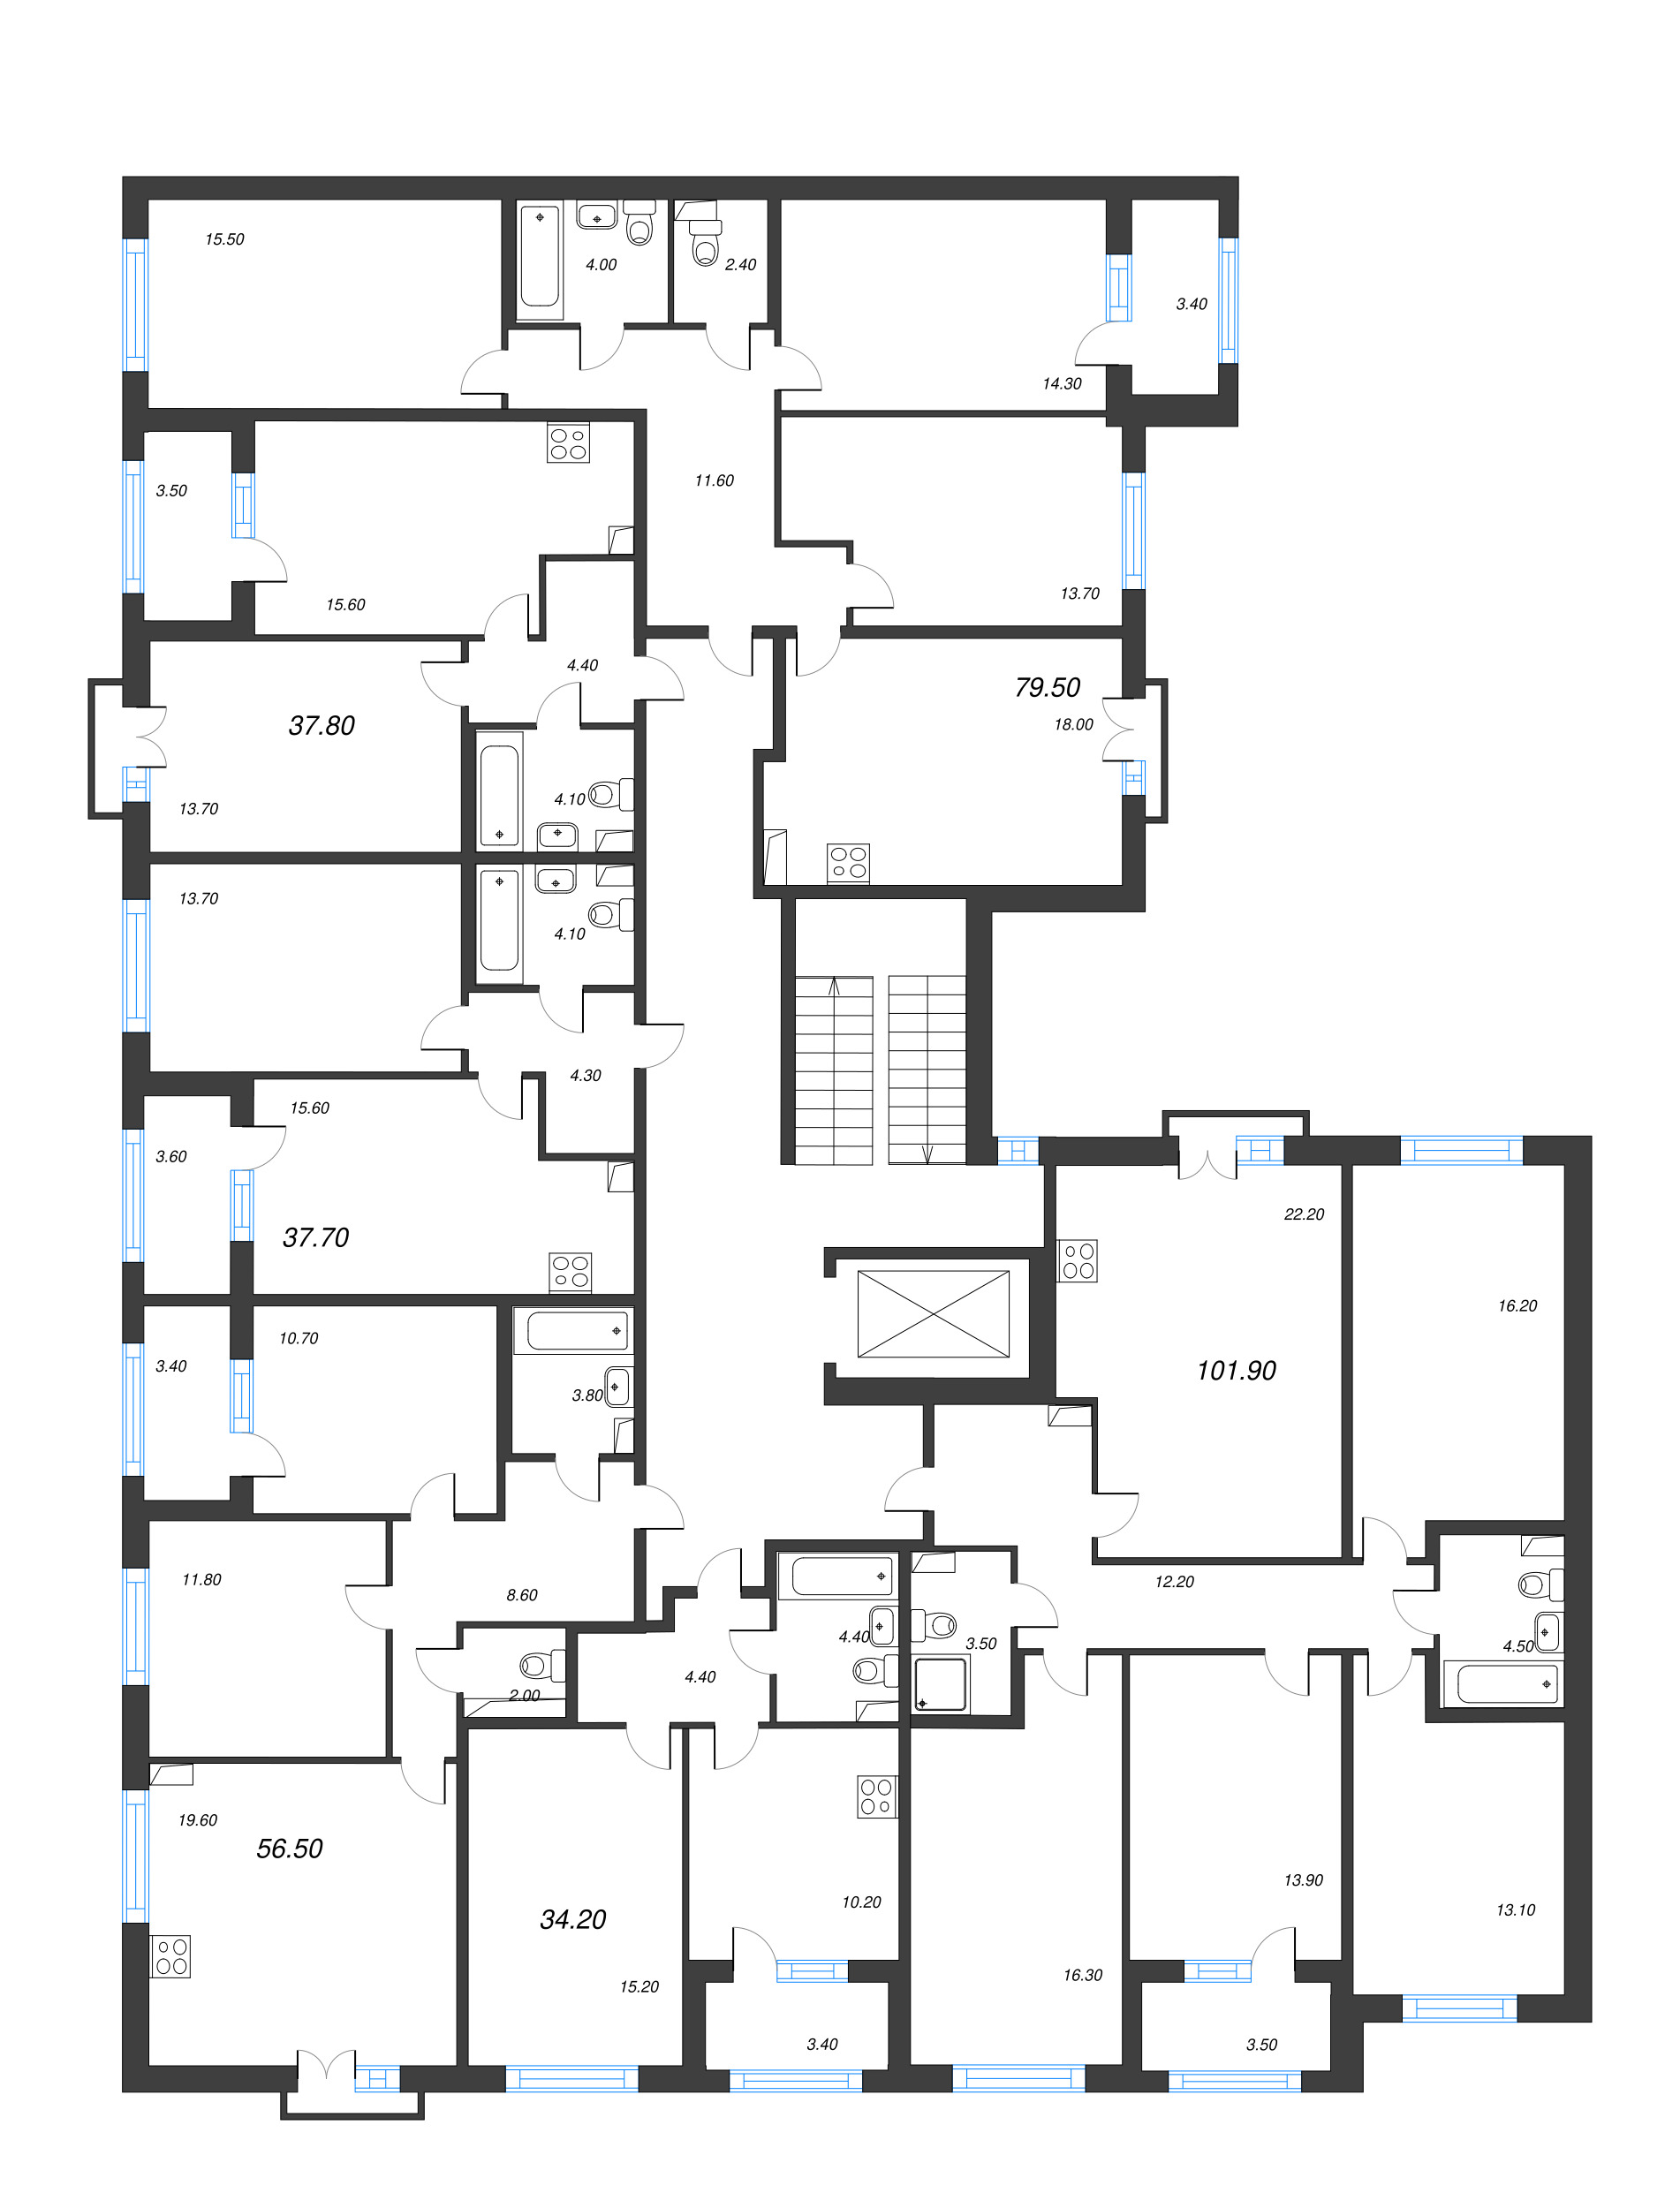 5-комнатная (Евро) квартира, 101.9 м² - планировка этажа